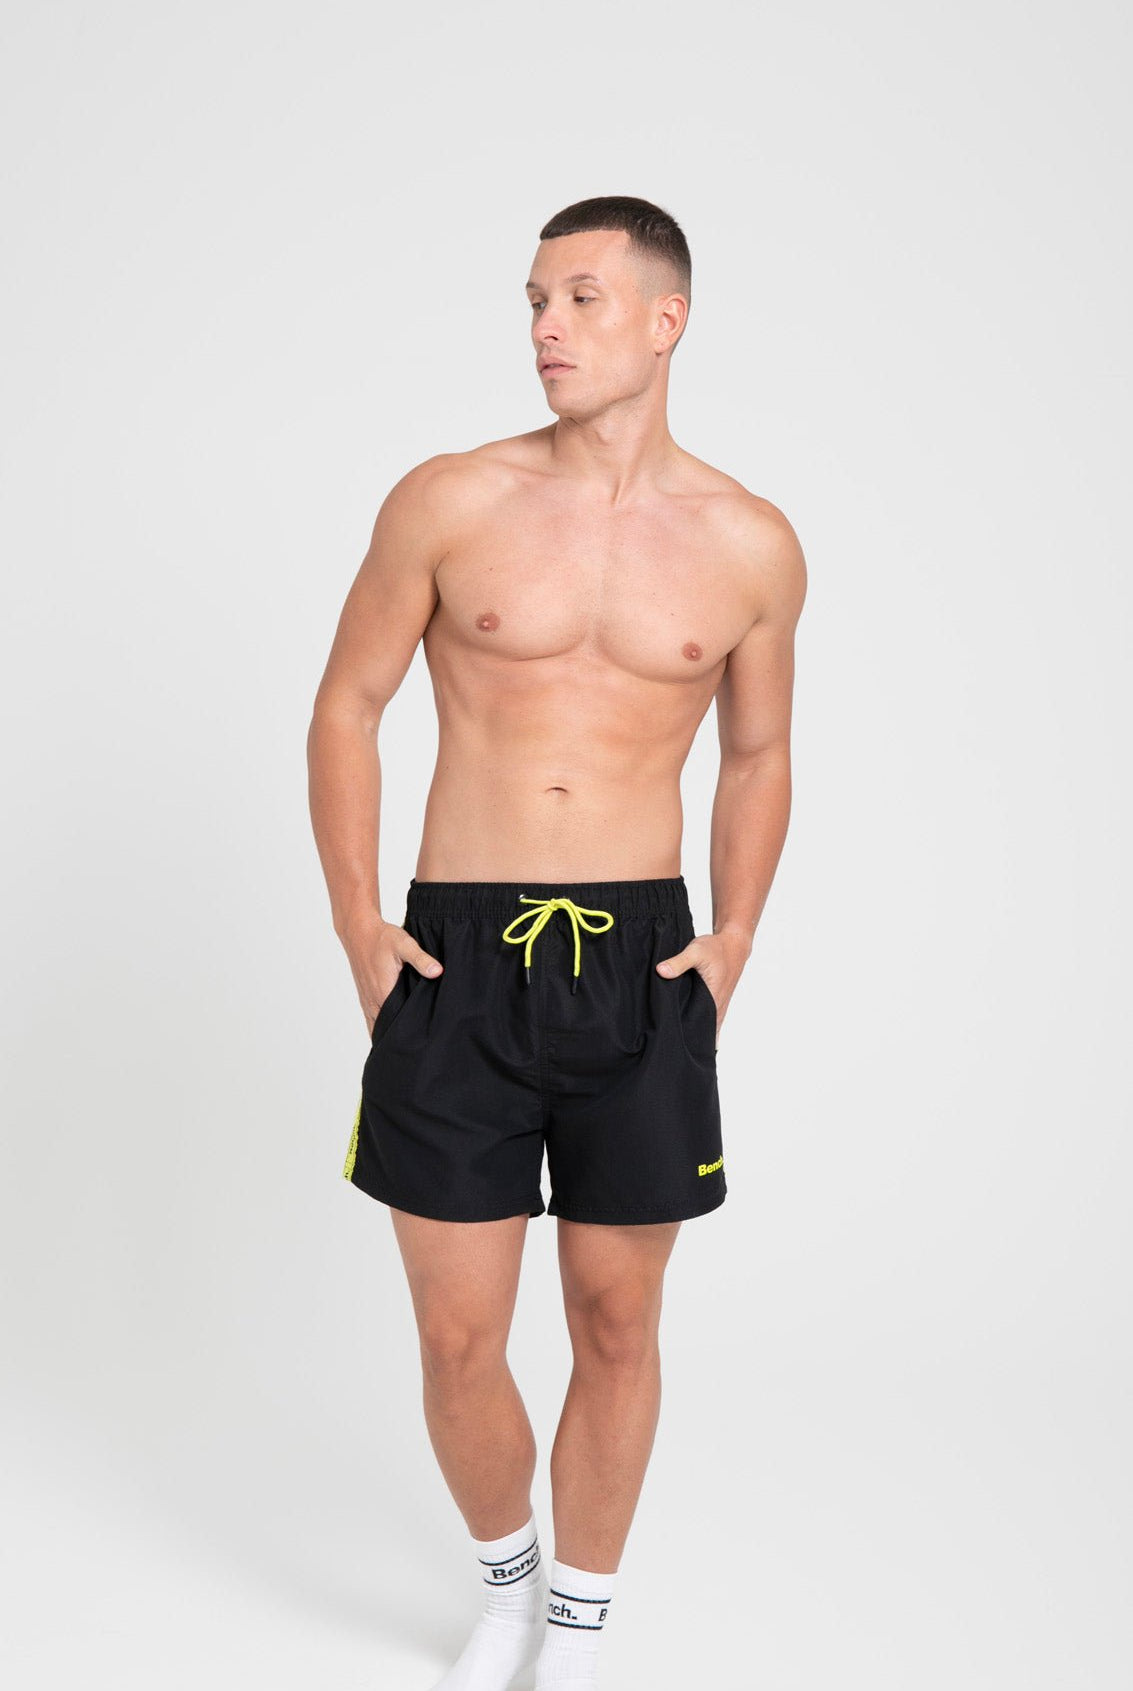 Mens 'SAMUI' Swim Shorts - BLACK - Shop at www.Bench.co.uk #LoveMyHood